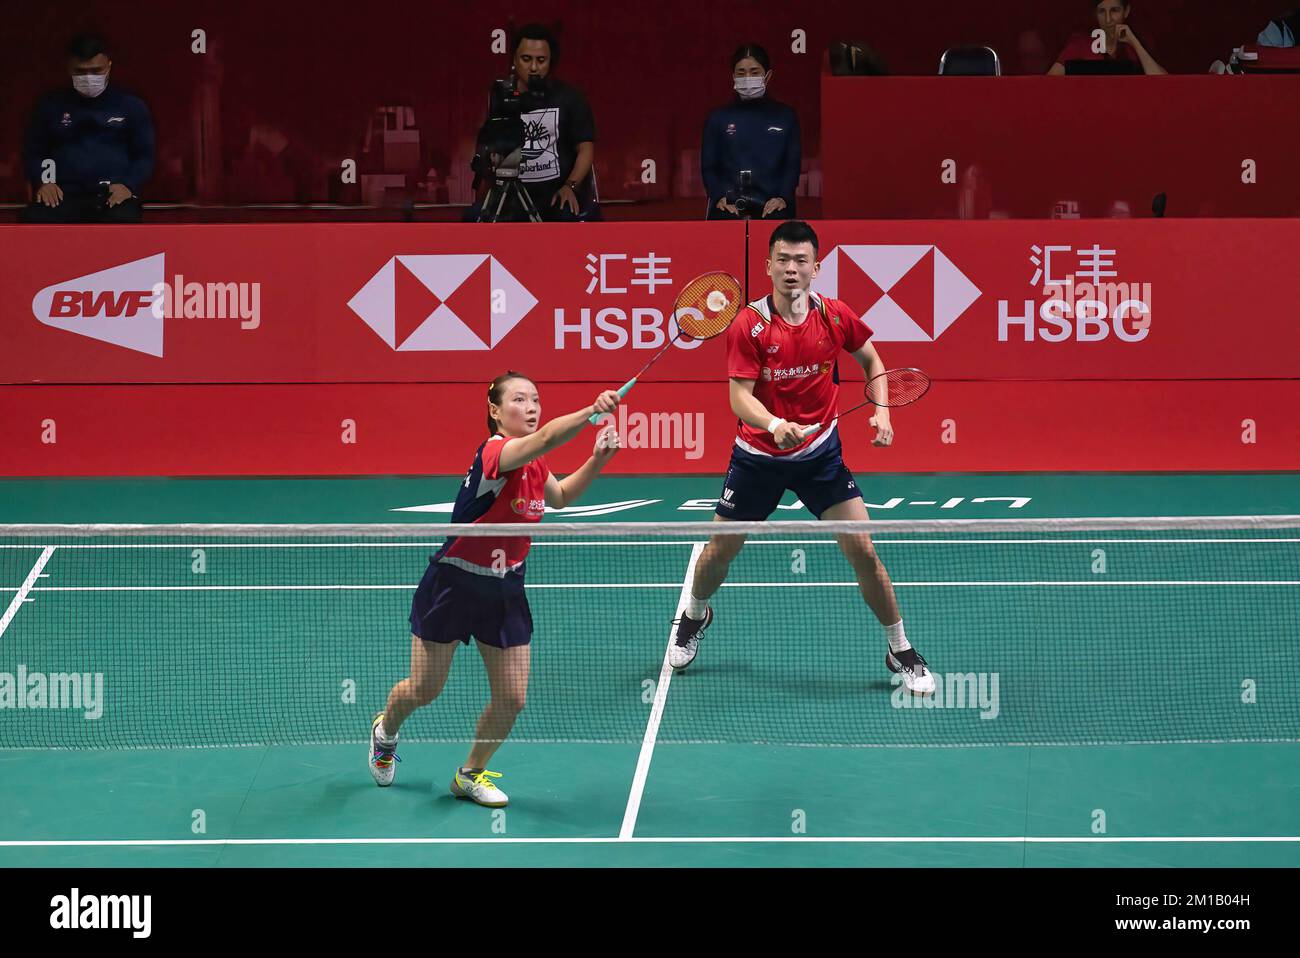 hsbc badminton 2022 live